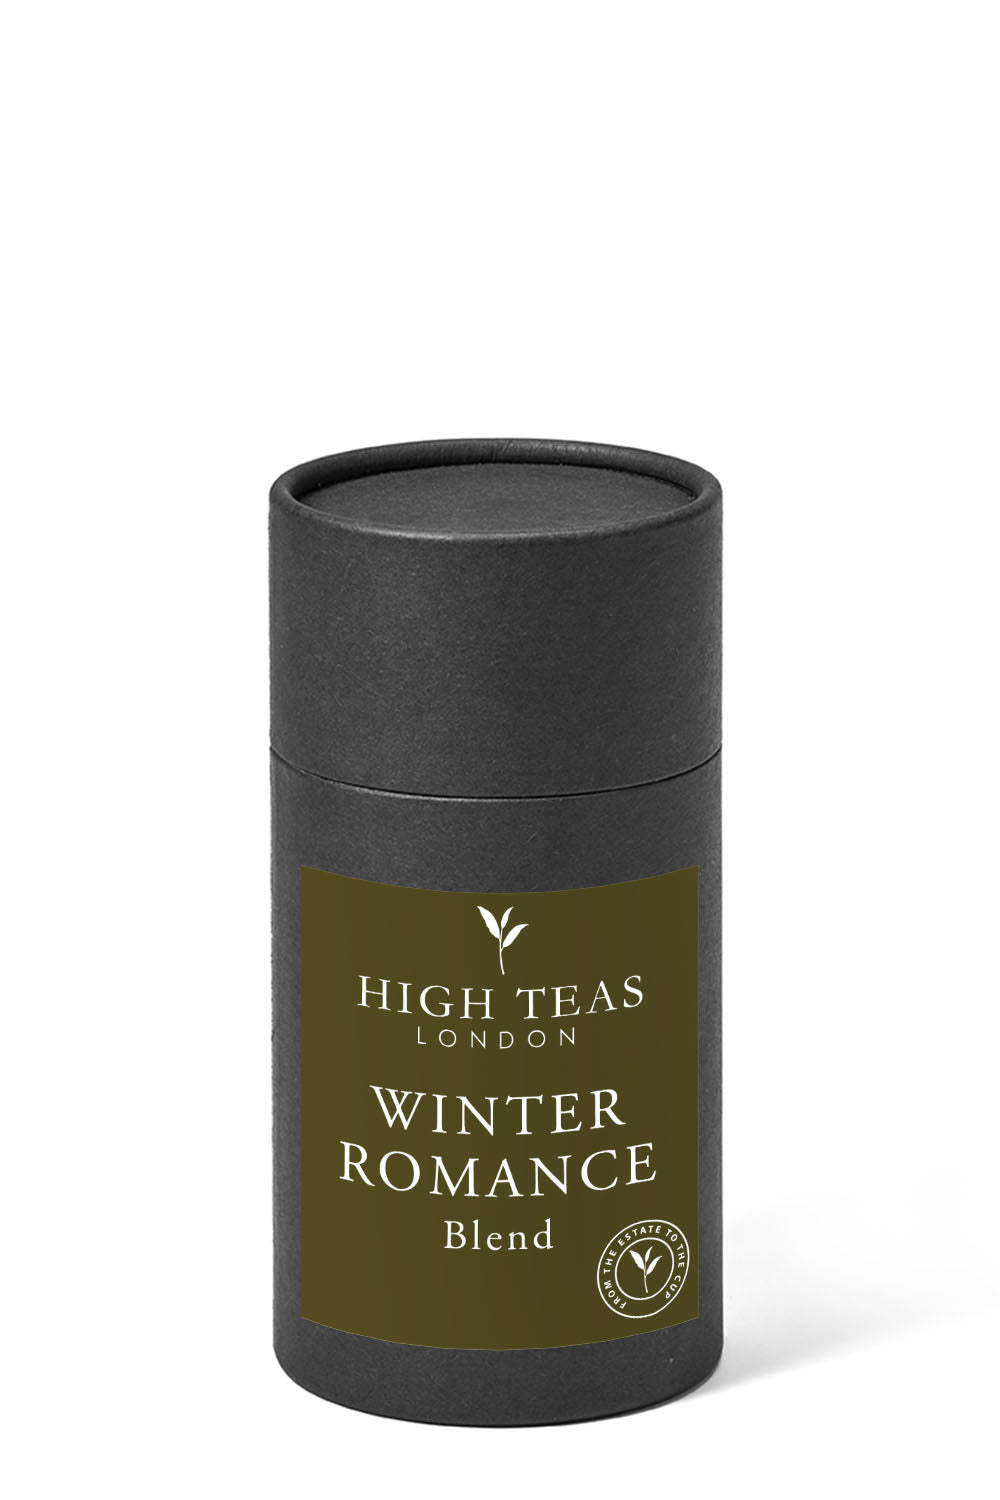 Winter Romance-60g gift-Loose Leaf Tea-High Teas